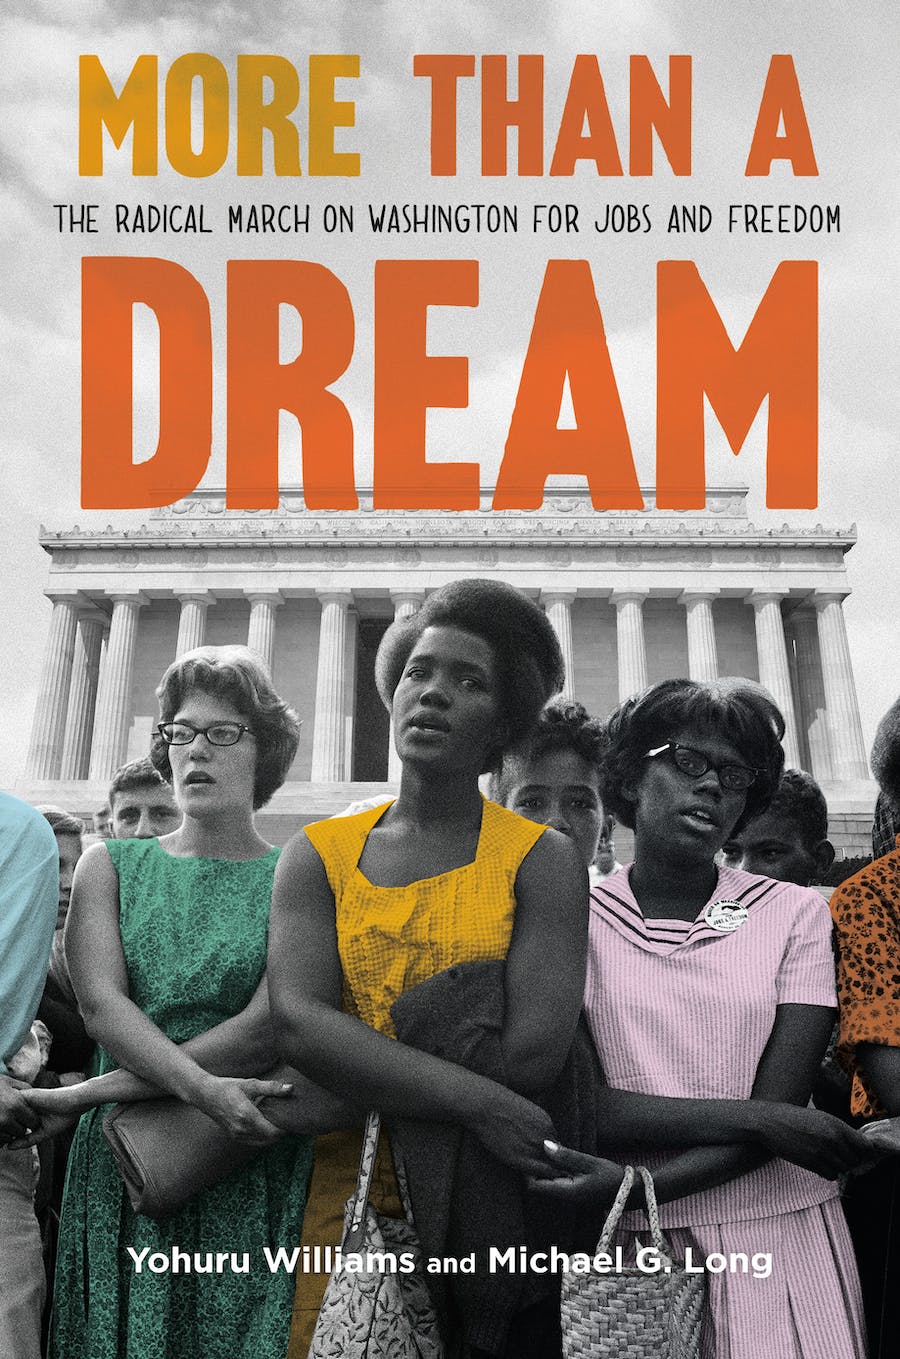 More Than a Dream: The Radical March on Washington for Jobs & Freedom by Yohuru Williams & Michael G. Long